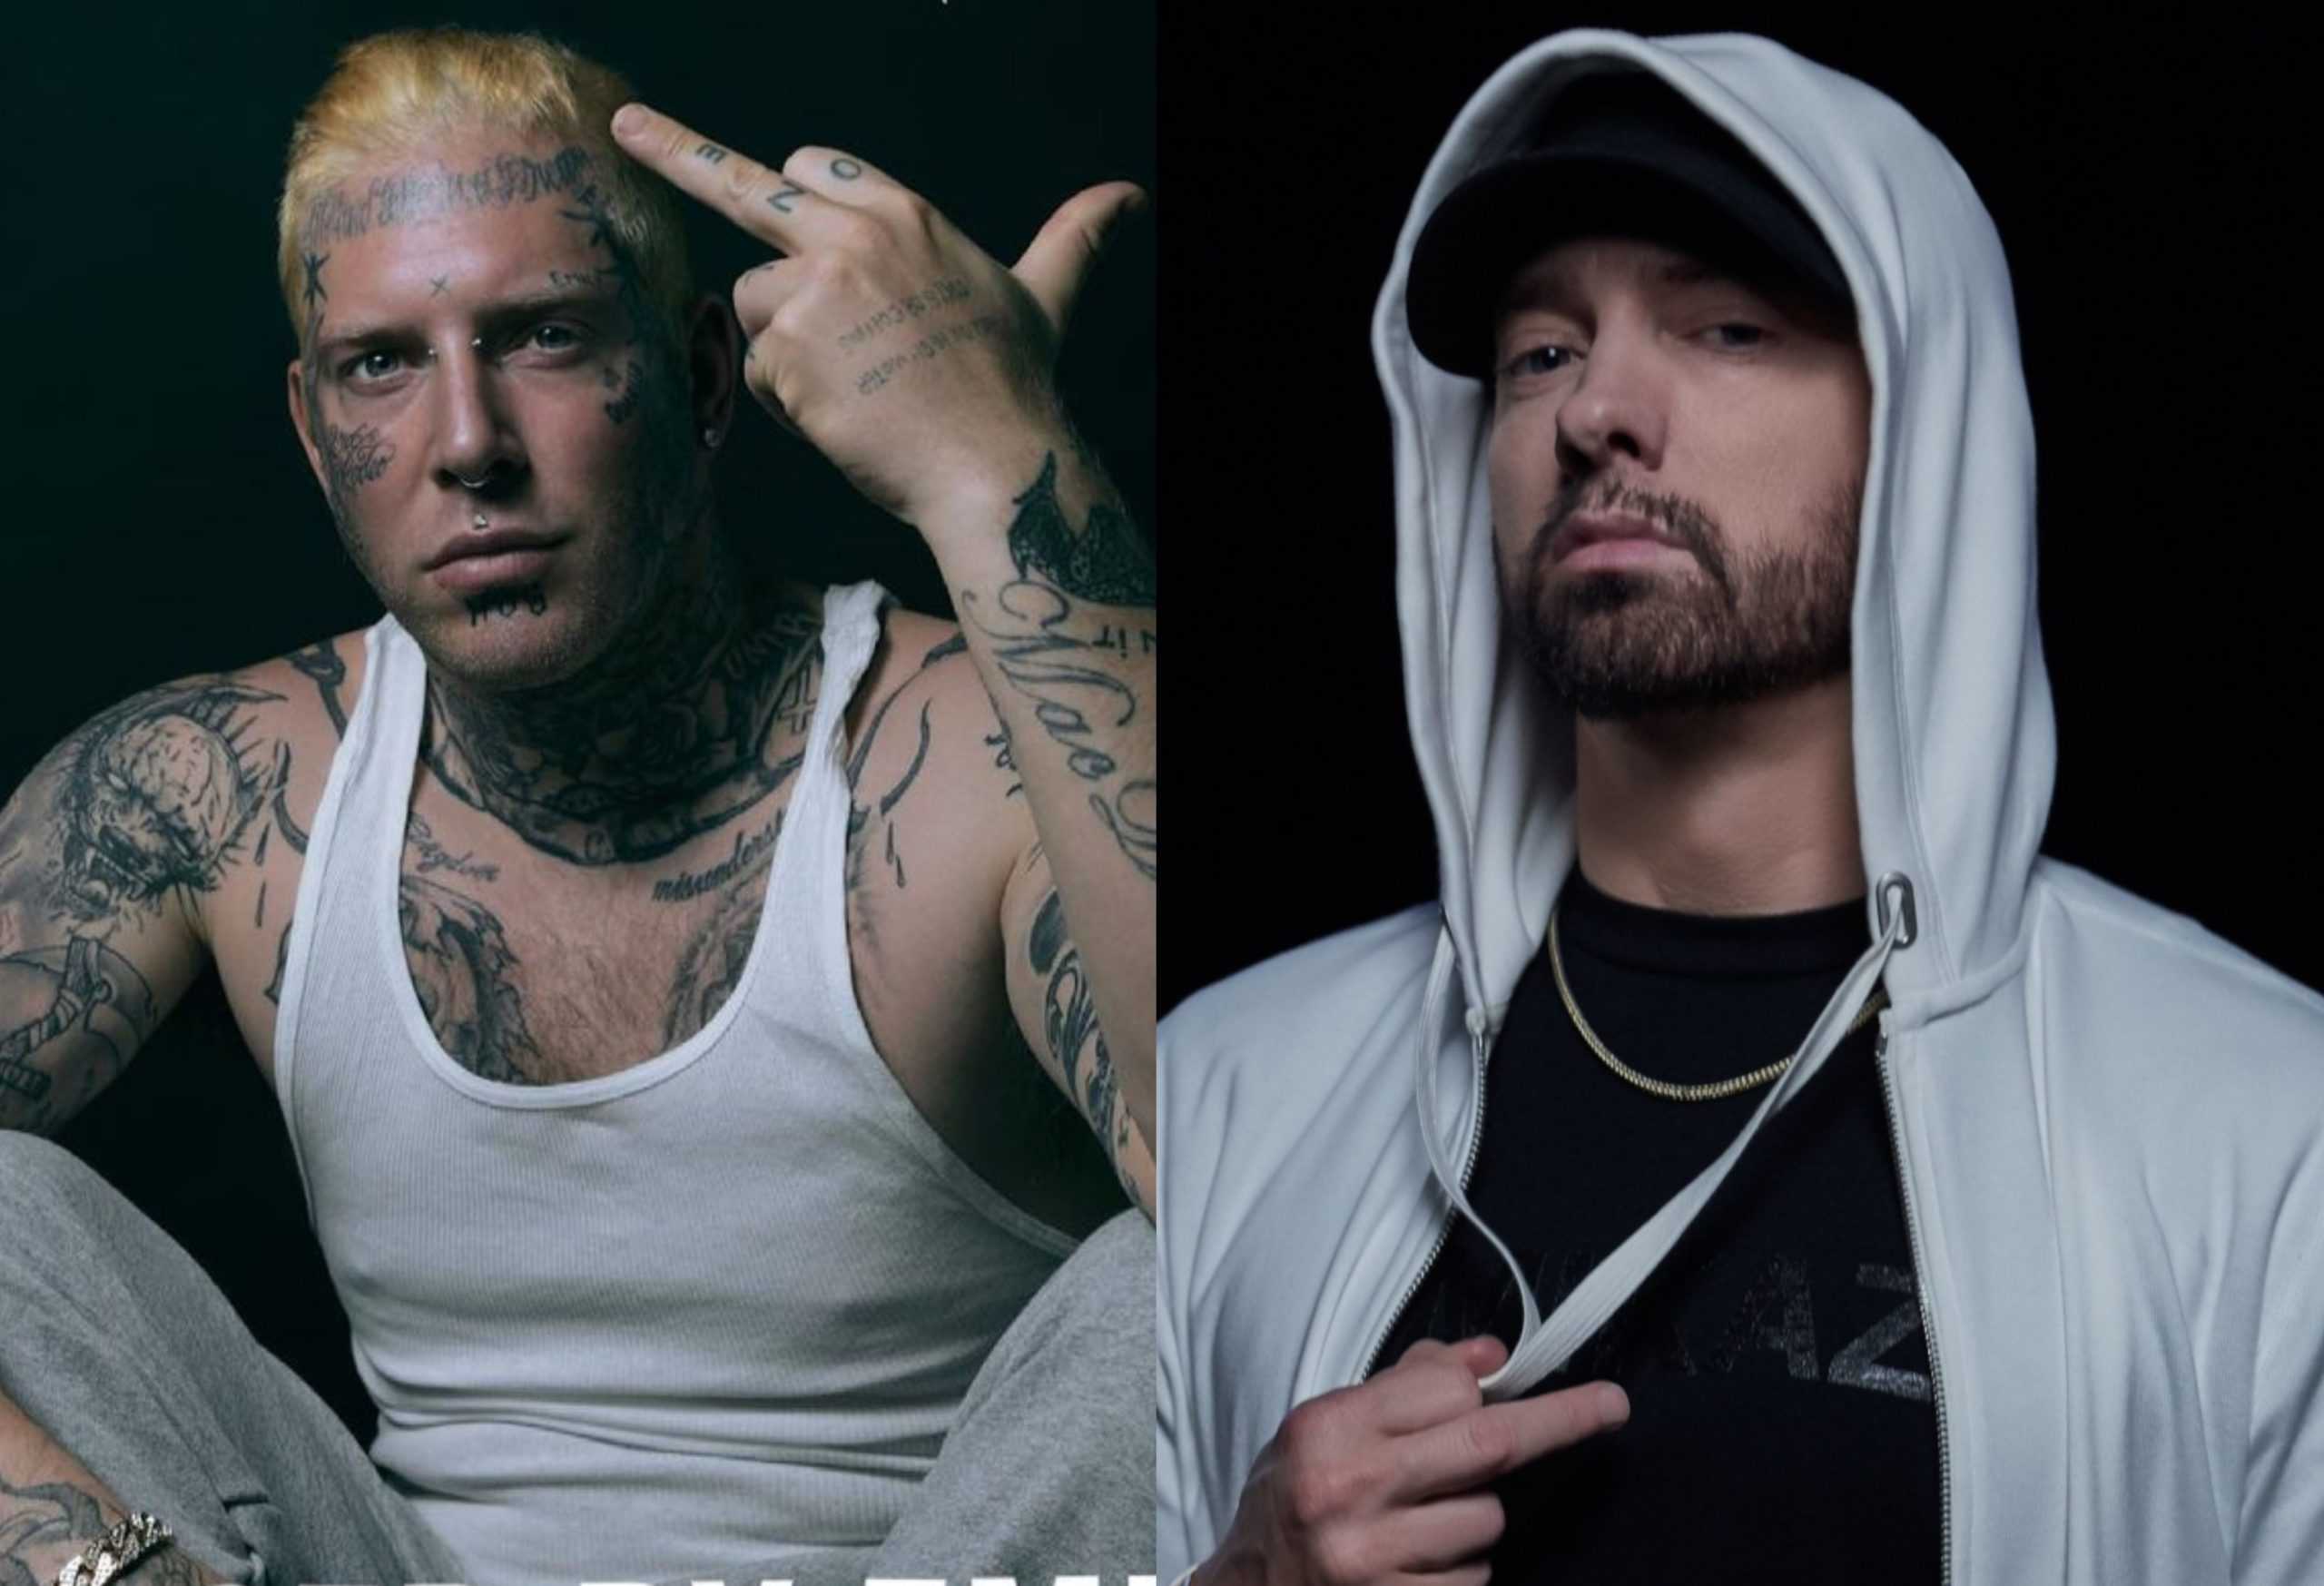 Tom MacDonald Drops New Song "Dear Slim" (Produced by Eminem)